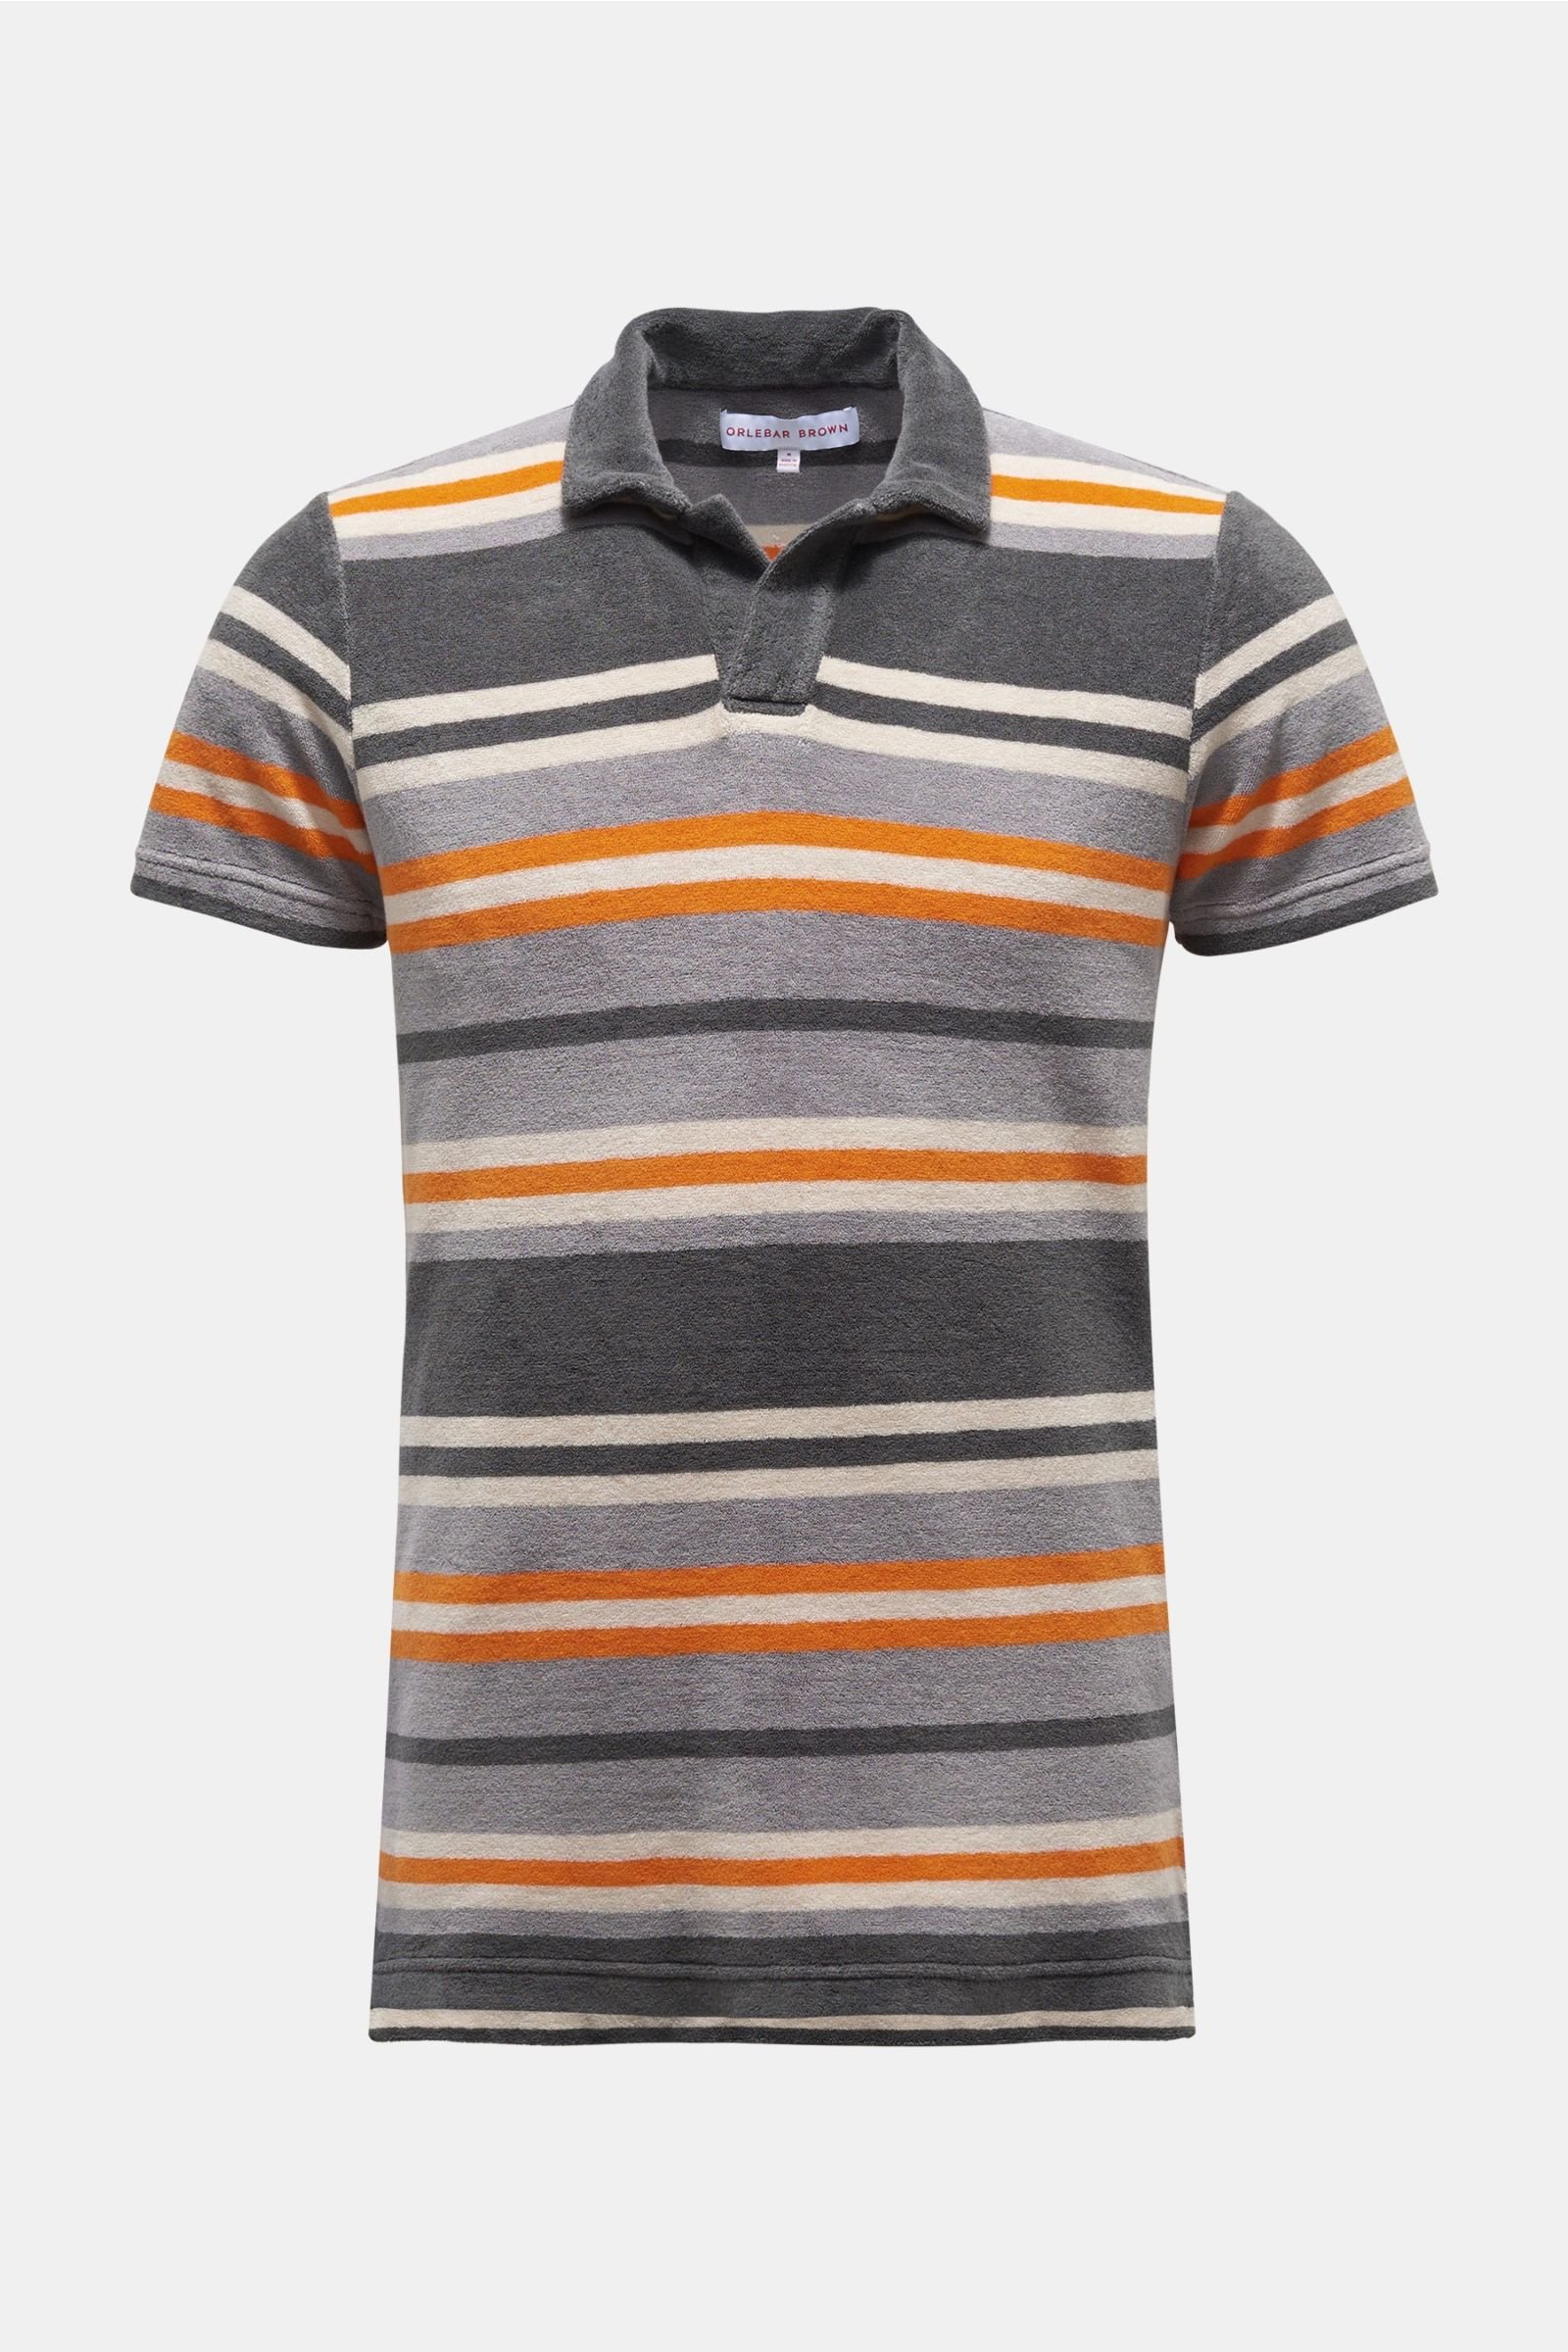 Frottee-Poloshirt 'Terry' grau/orange gestreift